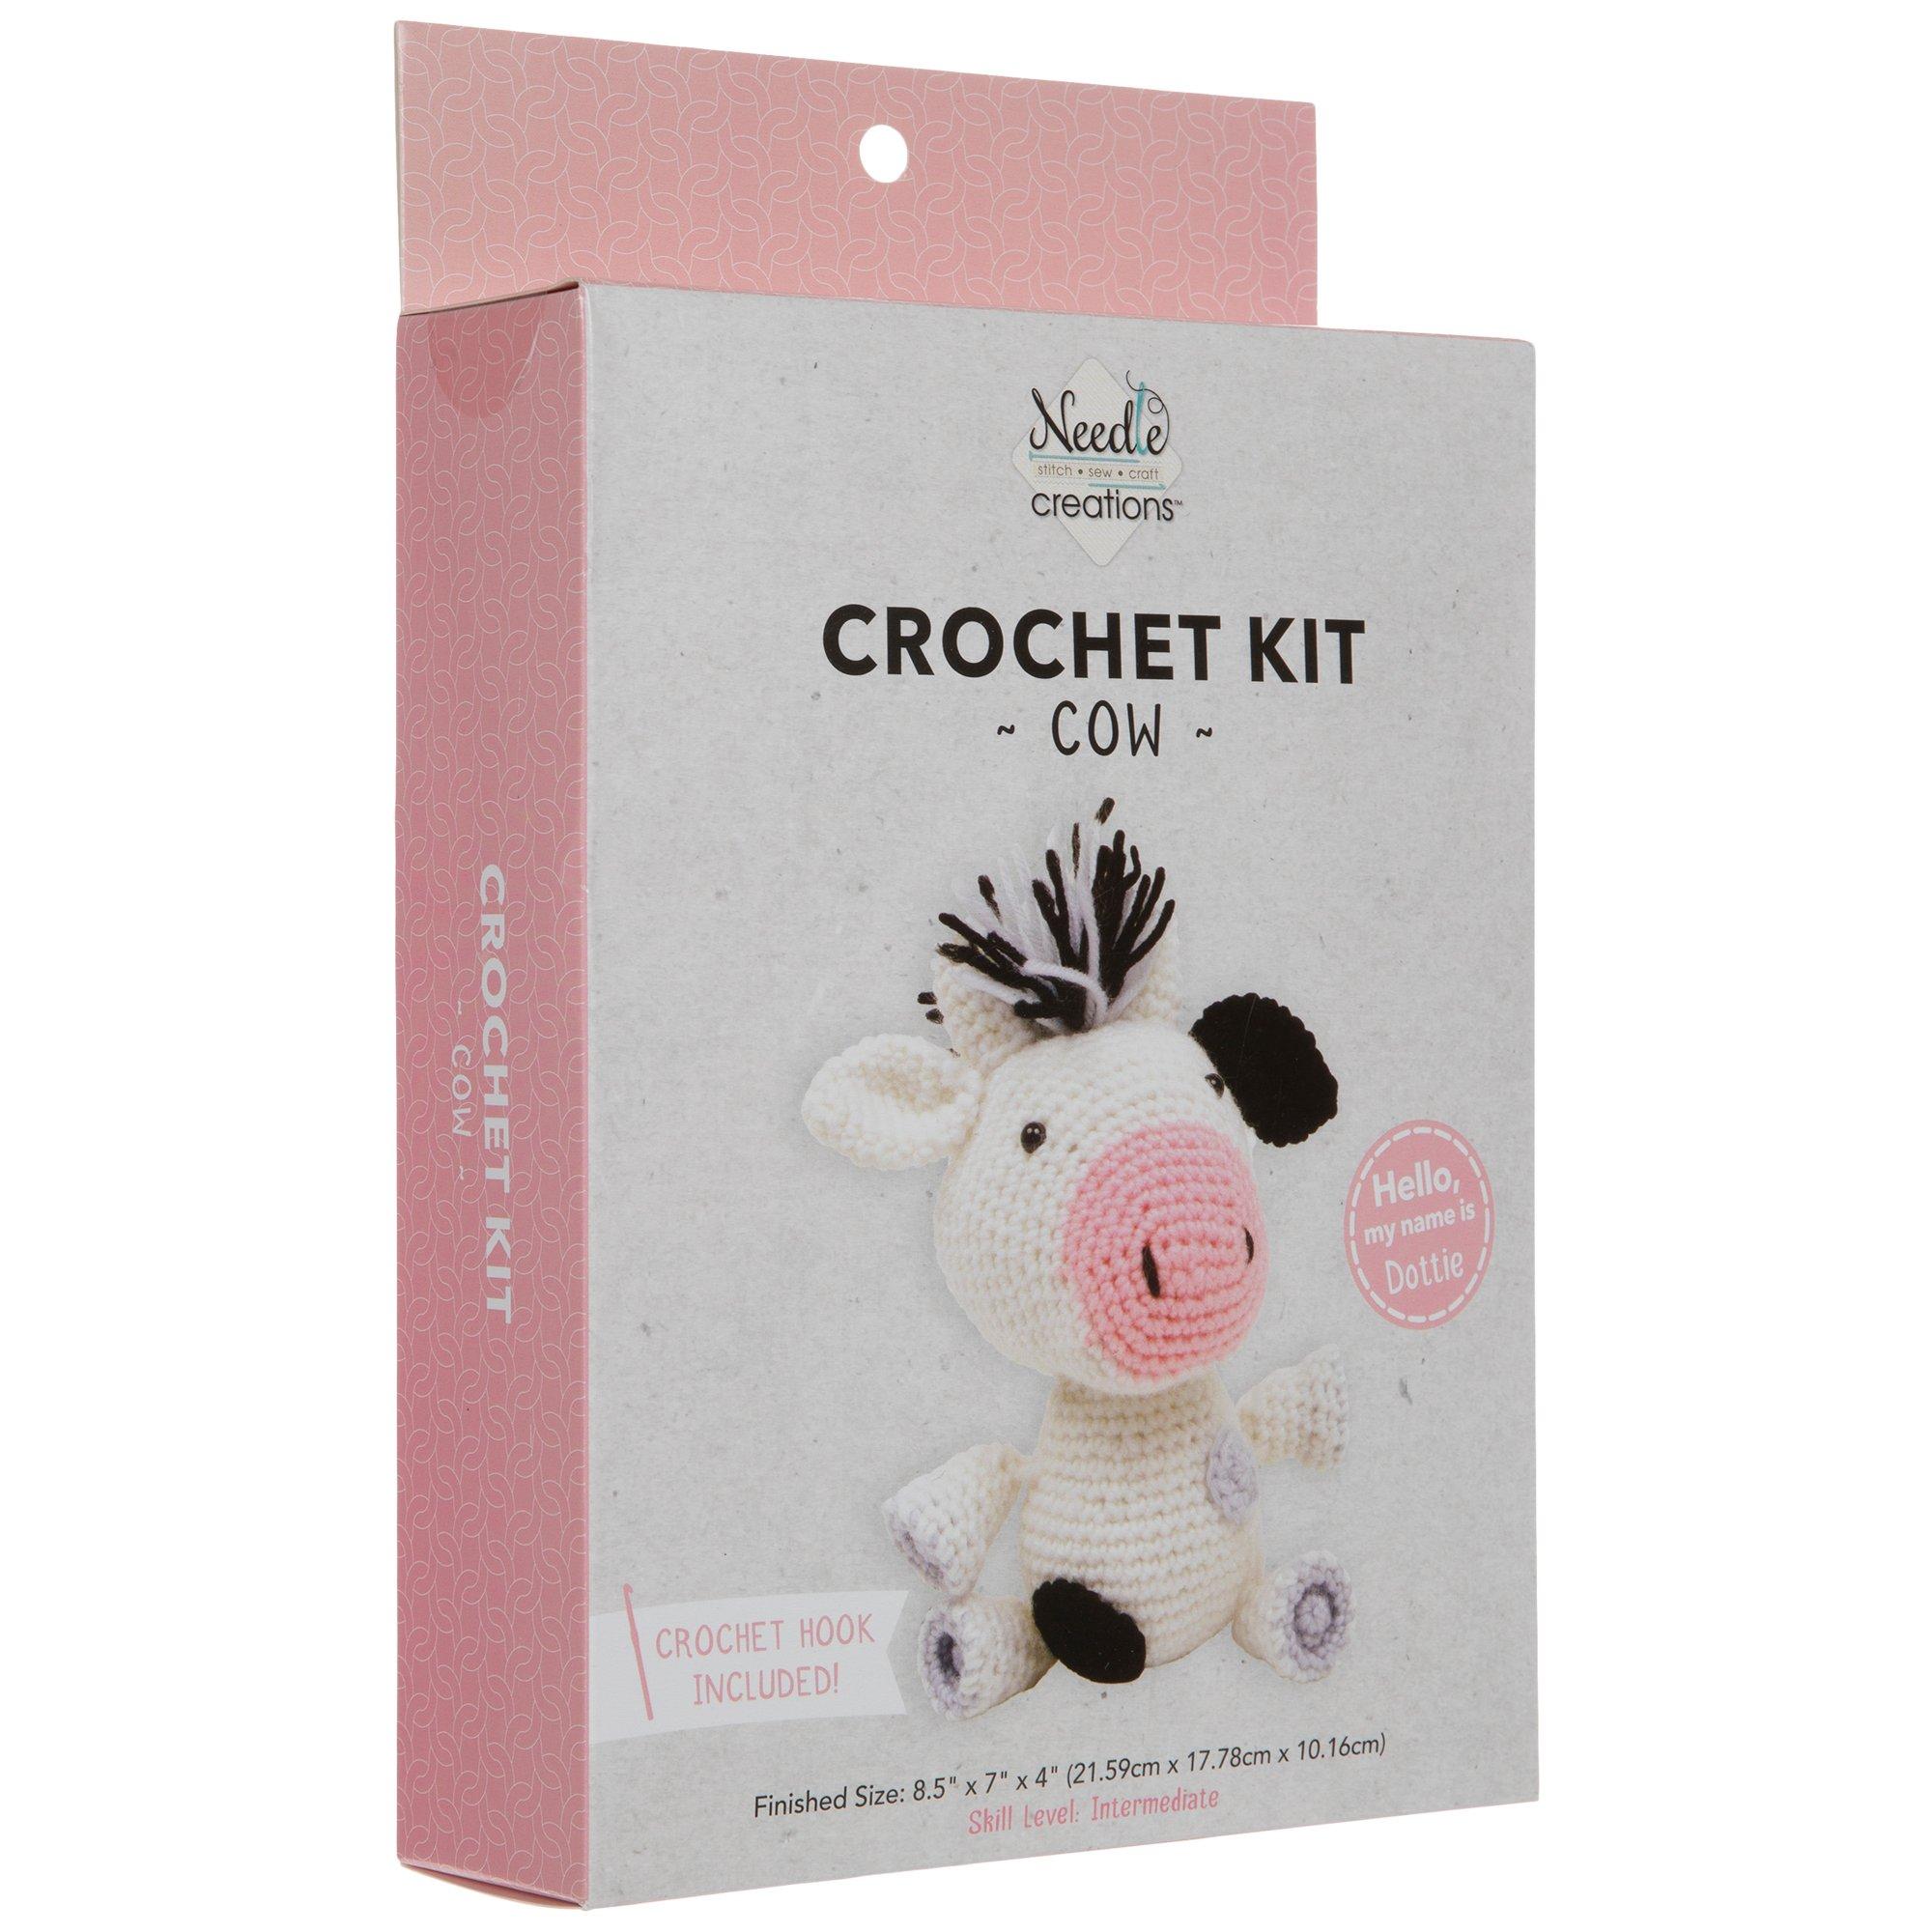 Moogan The Cow Crochet Kit Animal Crochet Includes Follow Along